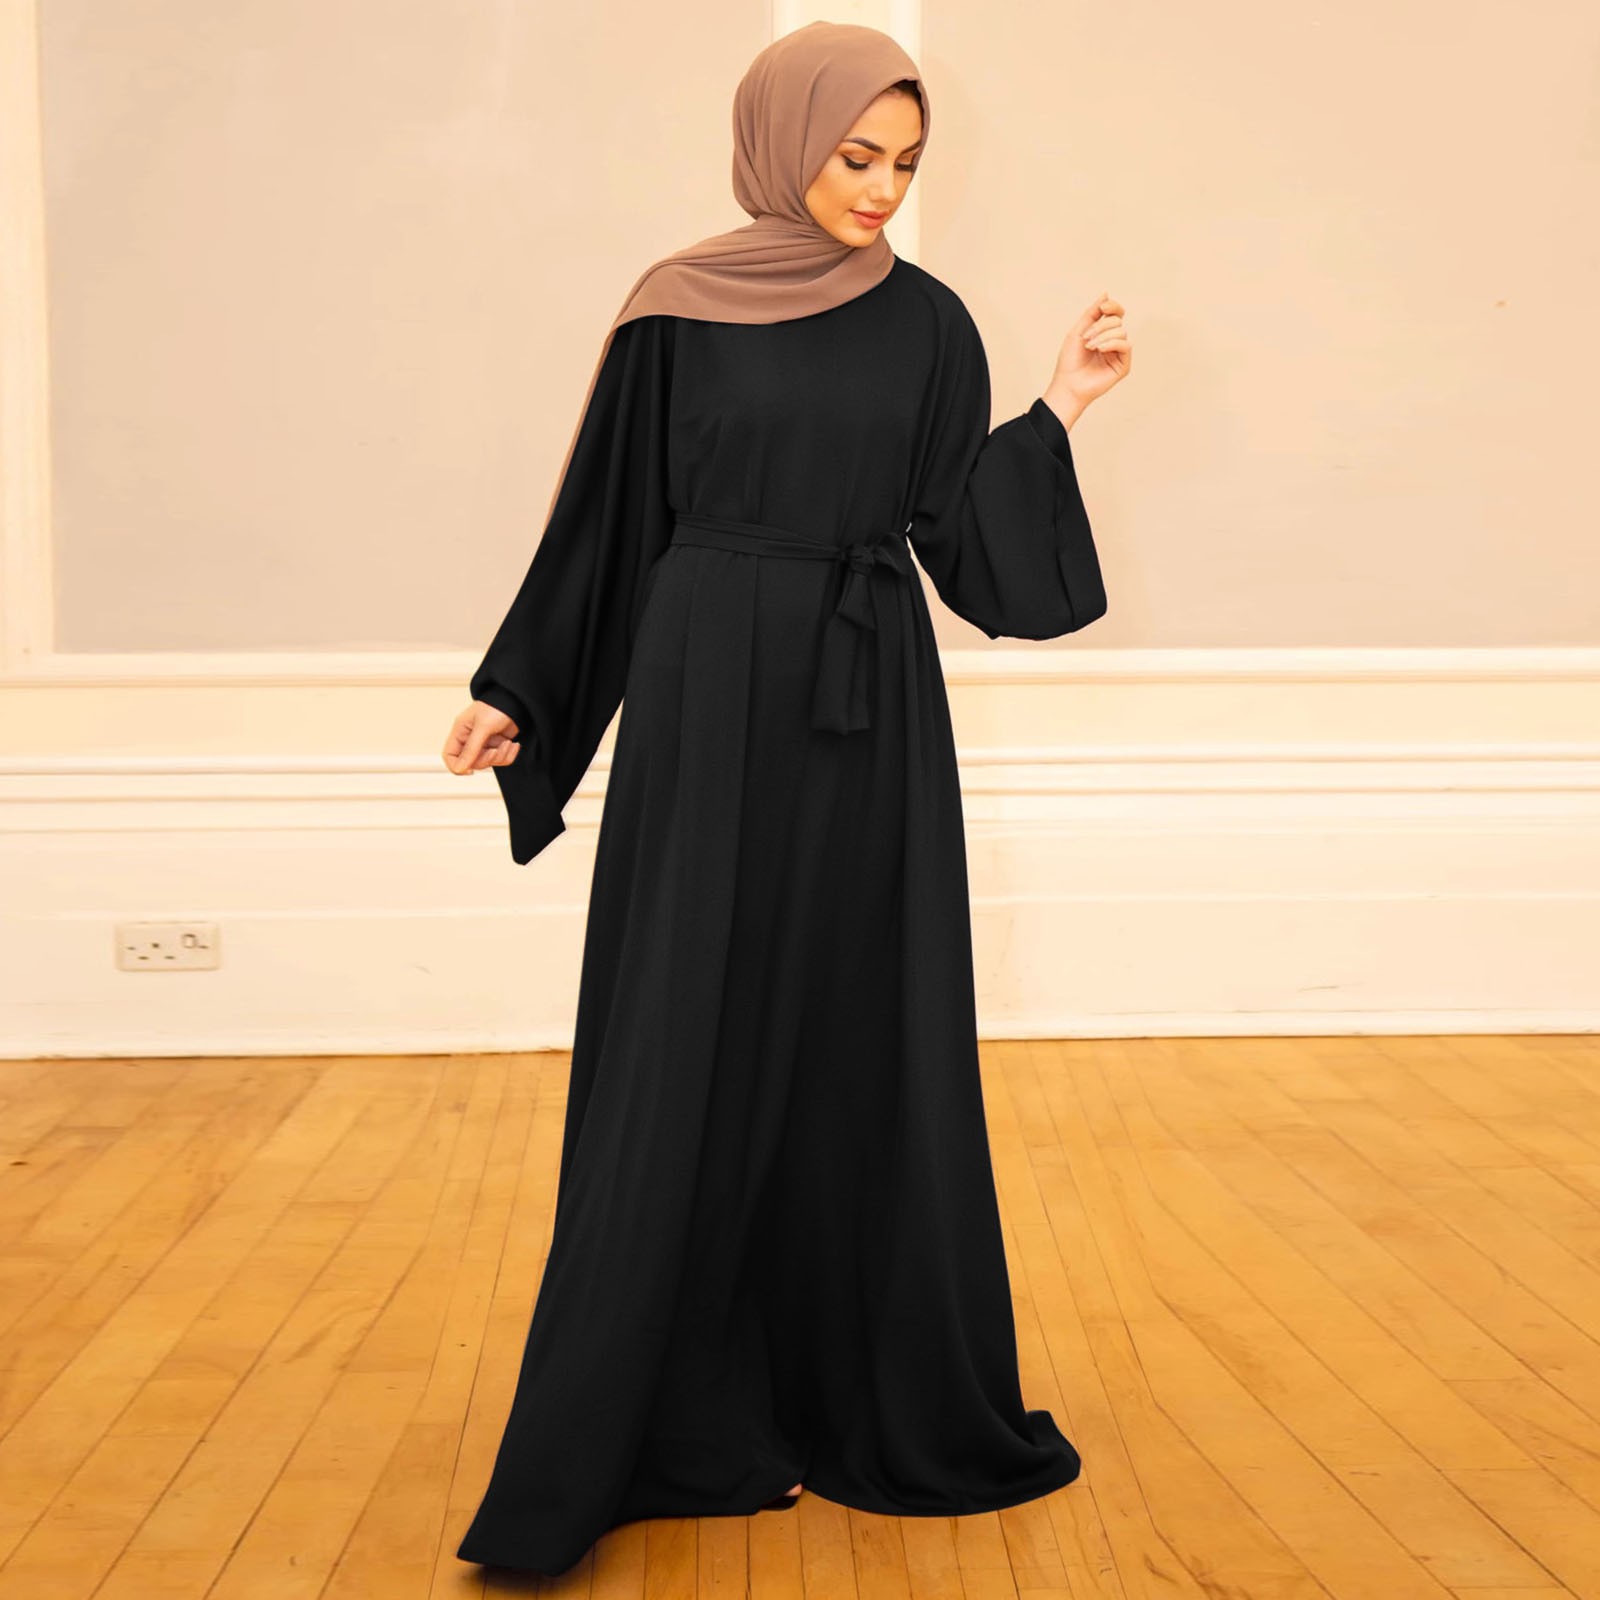 Fulijie Womens Dresses,Women's Casual Solid Muslim Dress Flare Sleeve ...